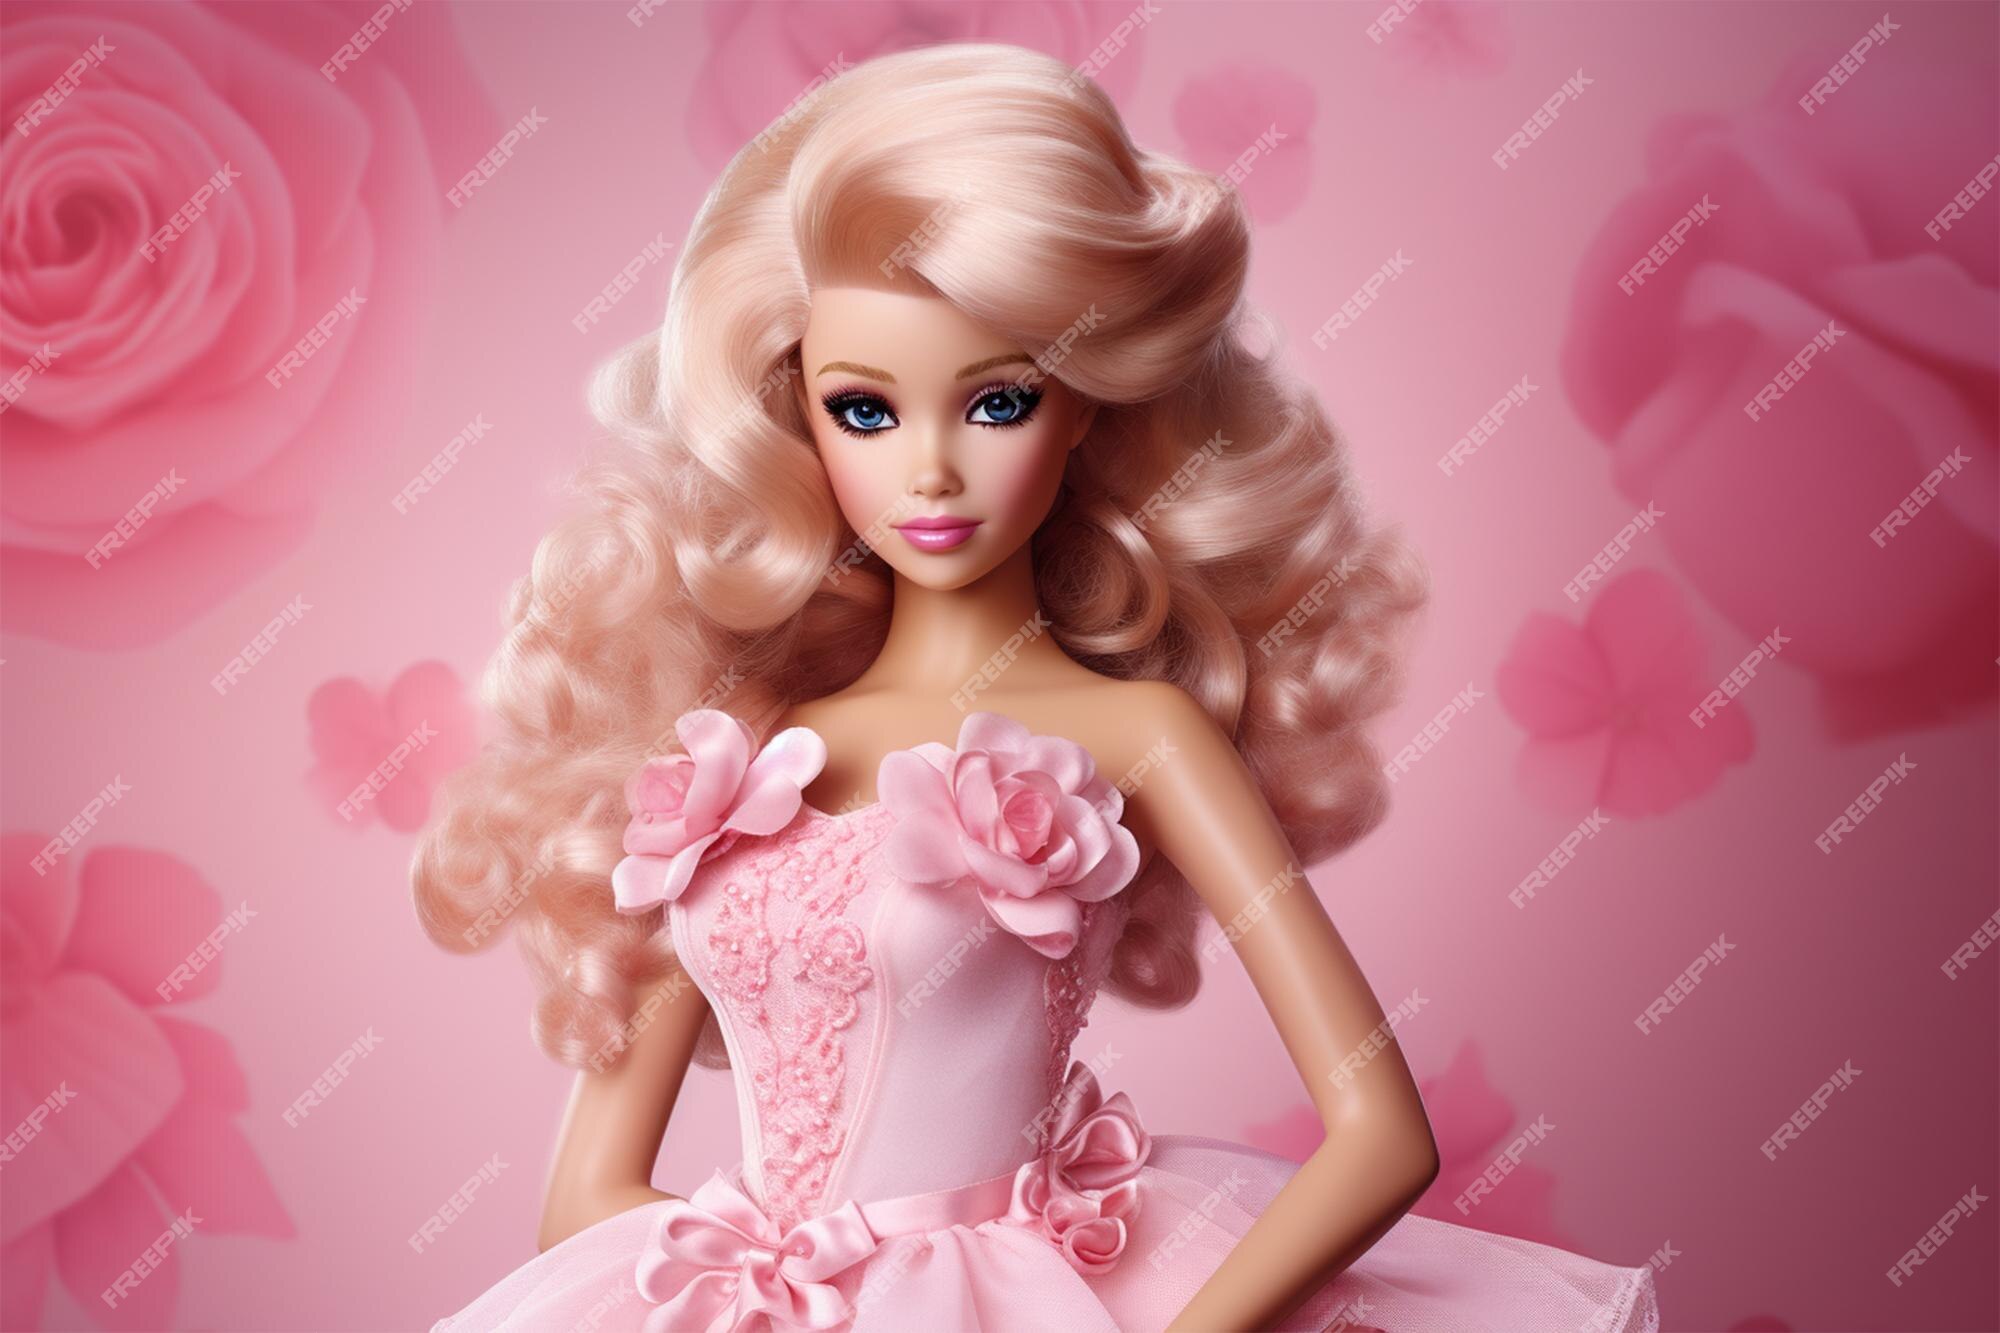 Boneca barbie fofa roupa de menina loira fundo de papel de parede rosa